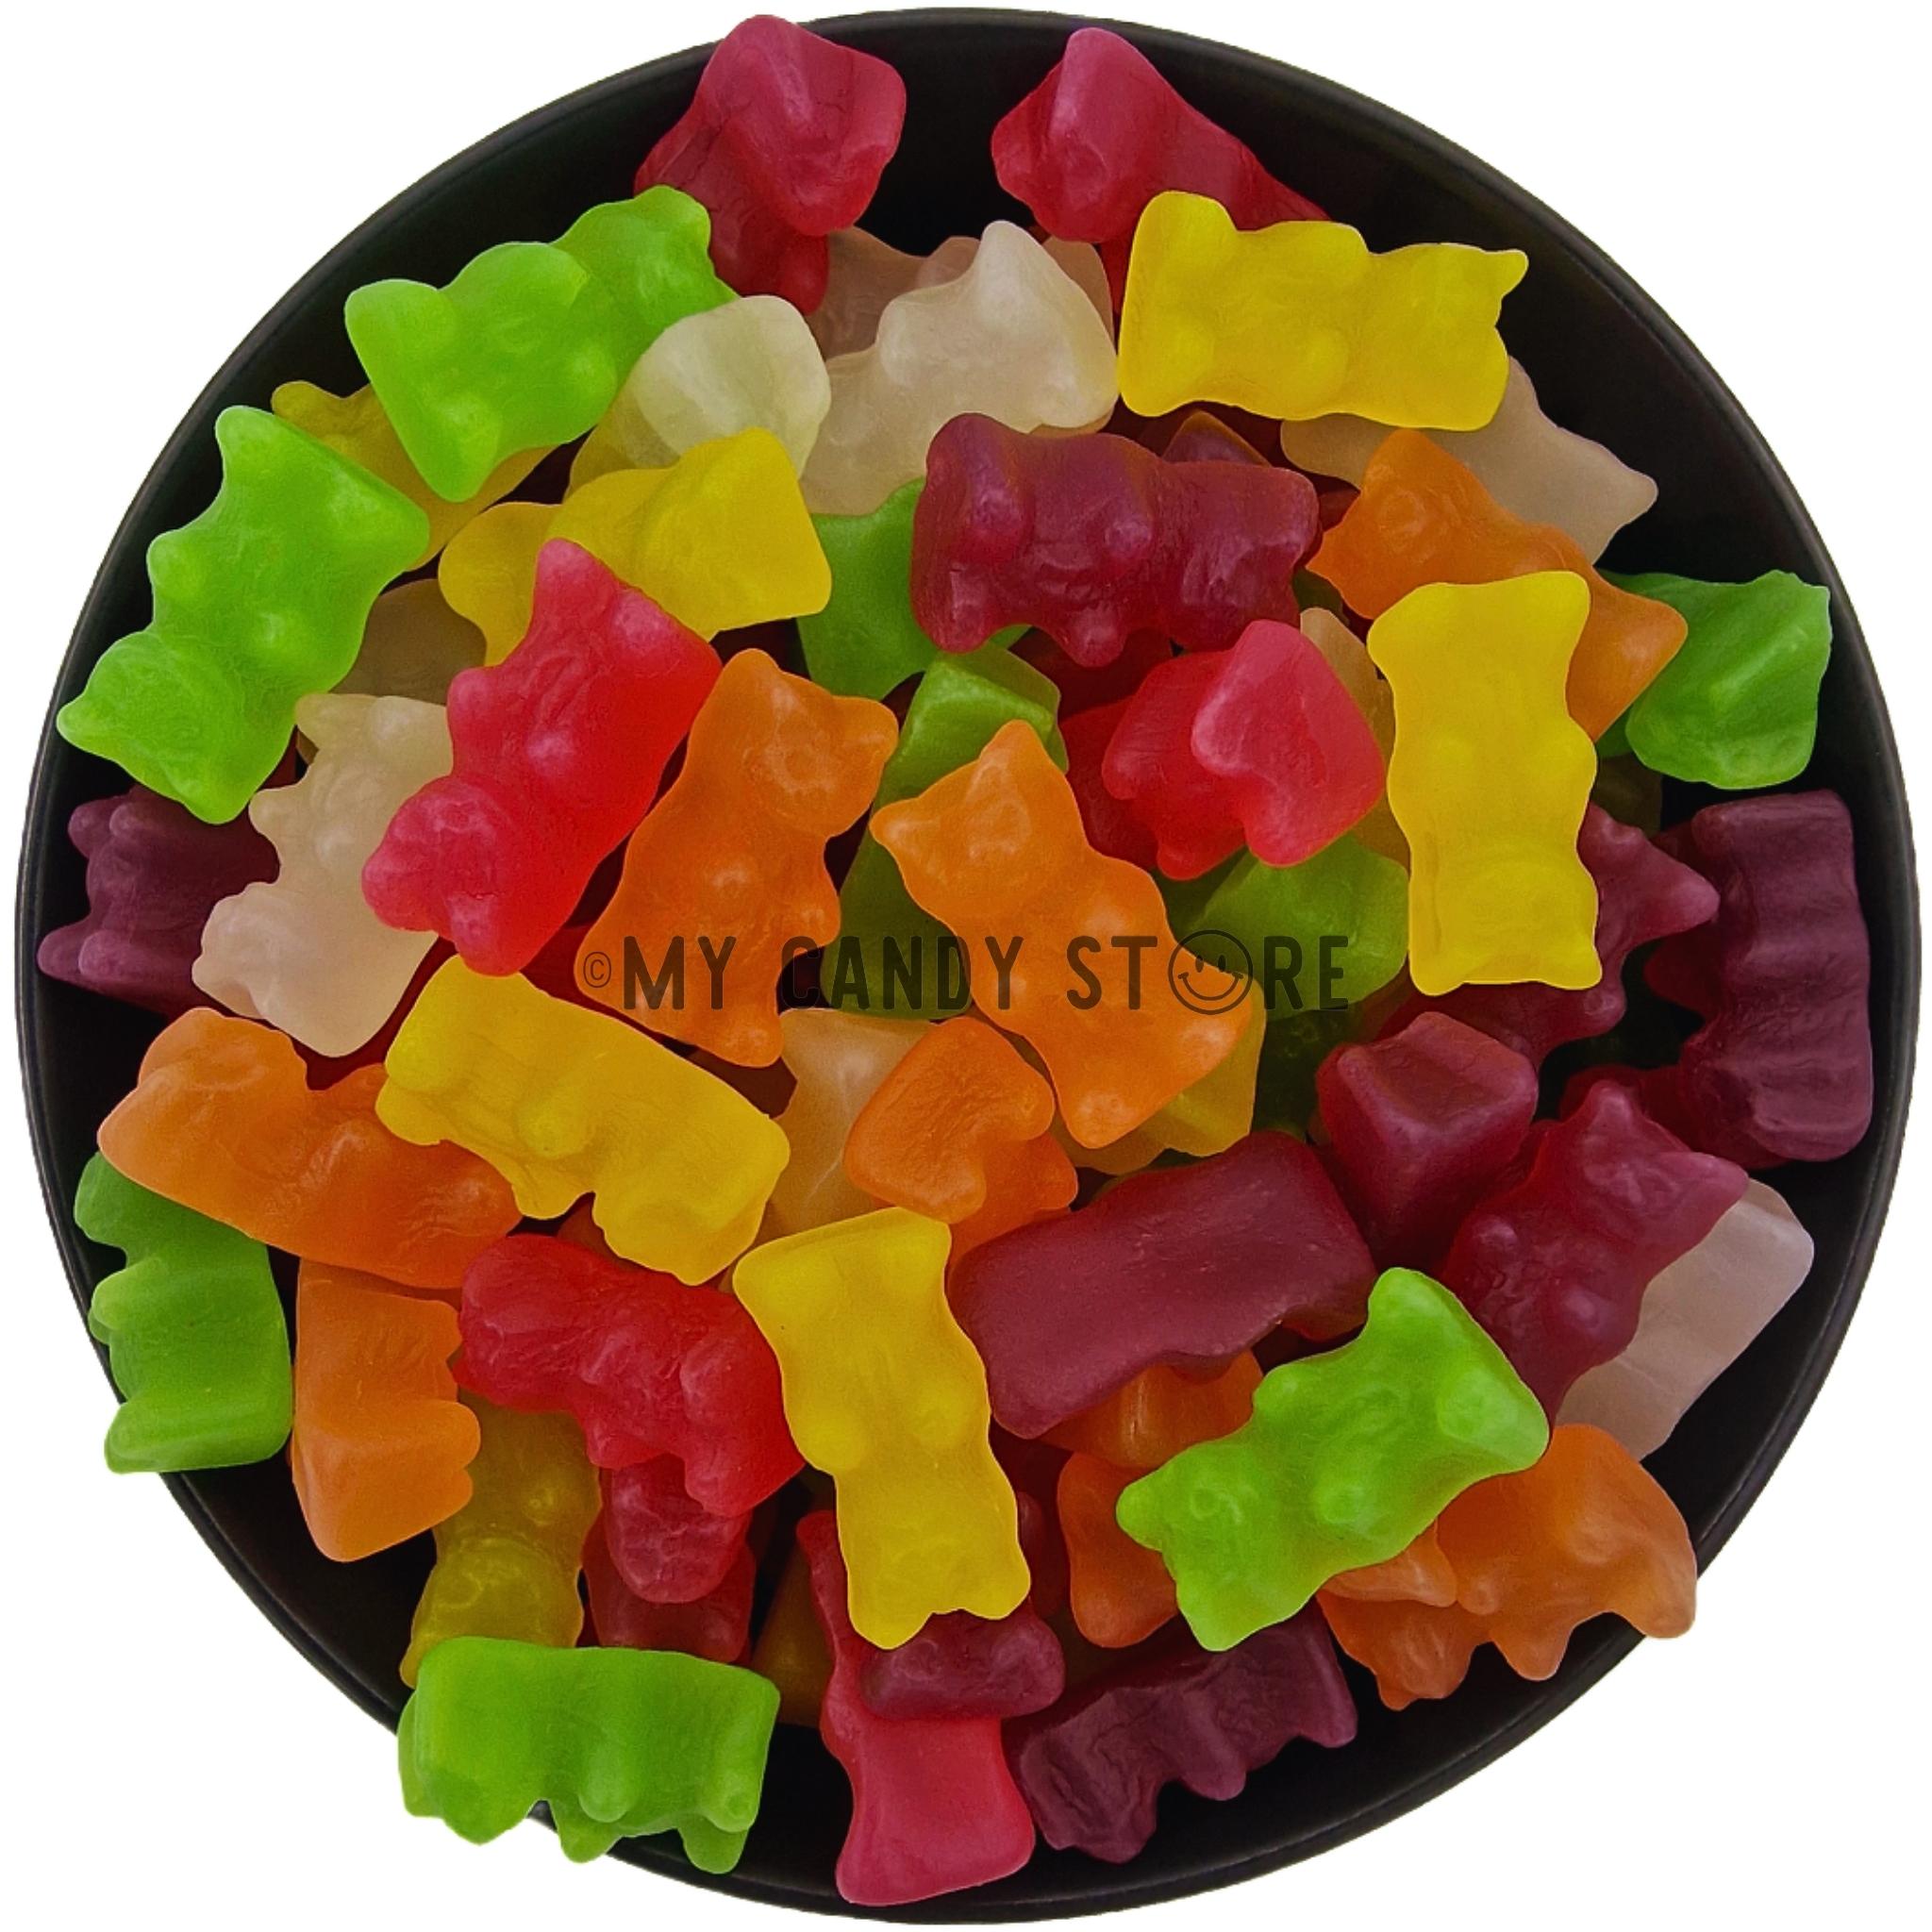 Colorful Teddy Bears